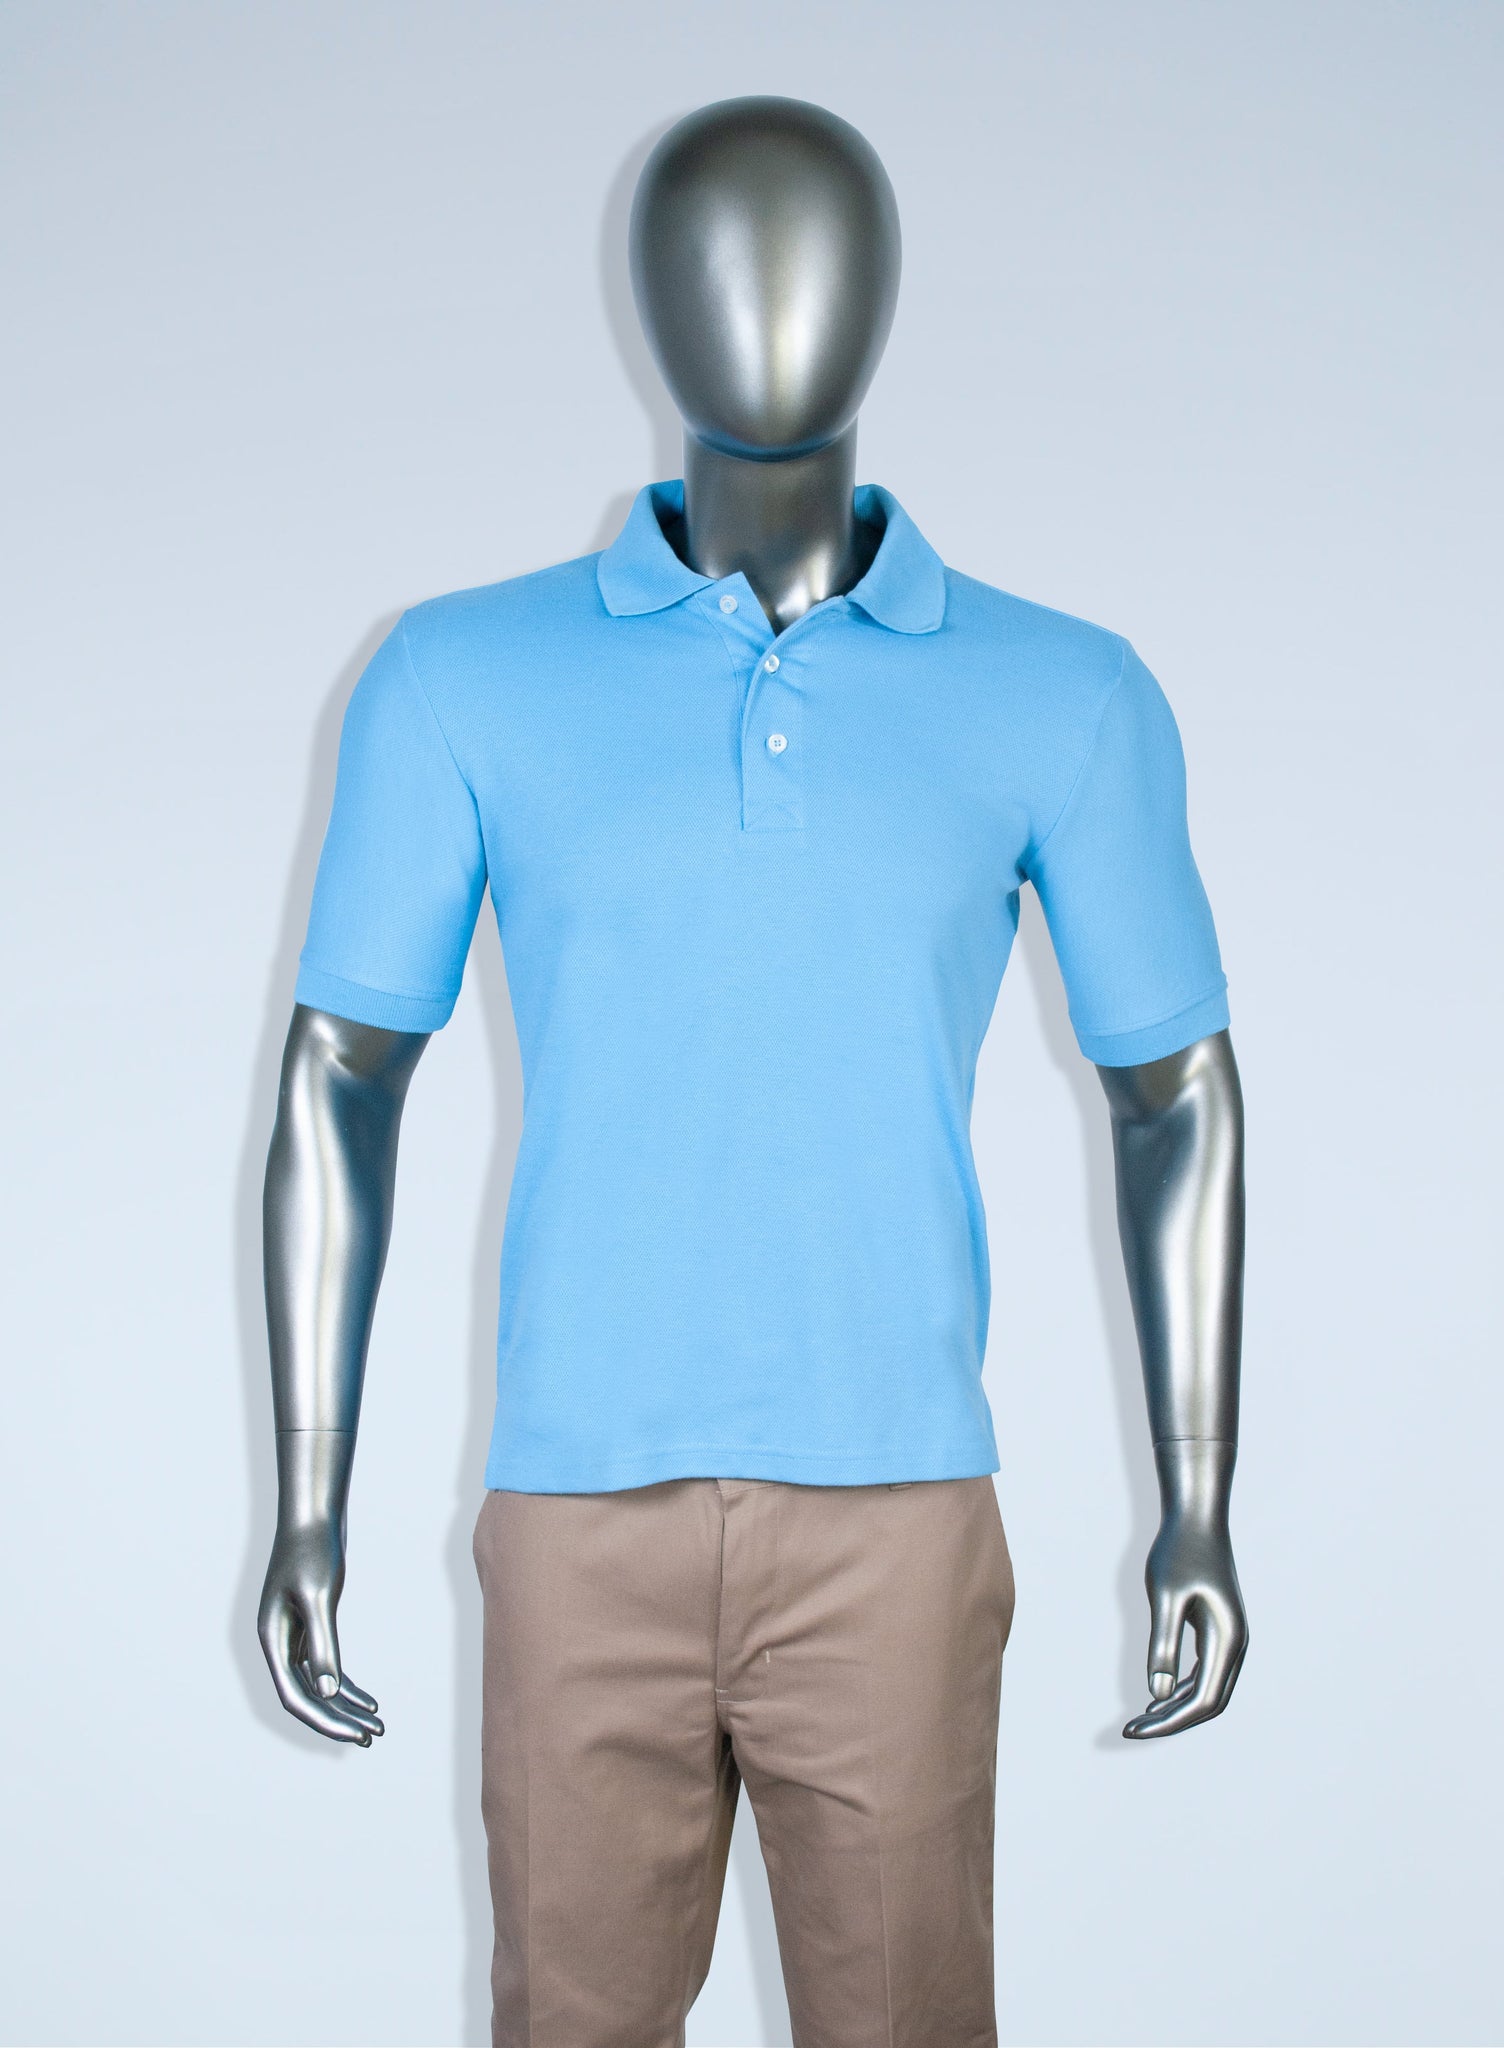 Apparel Duratex Blue Men\'s Shirt Light – Pique Polo